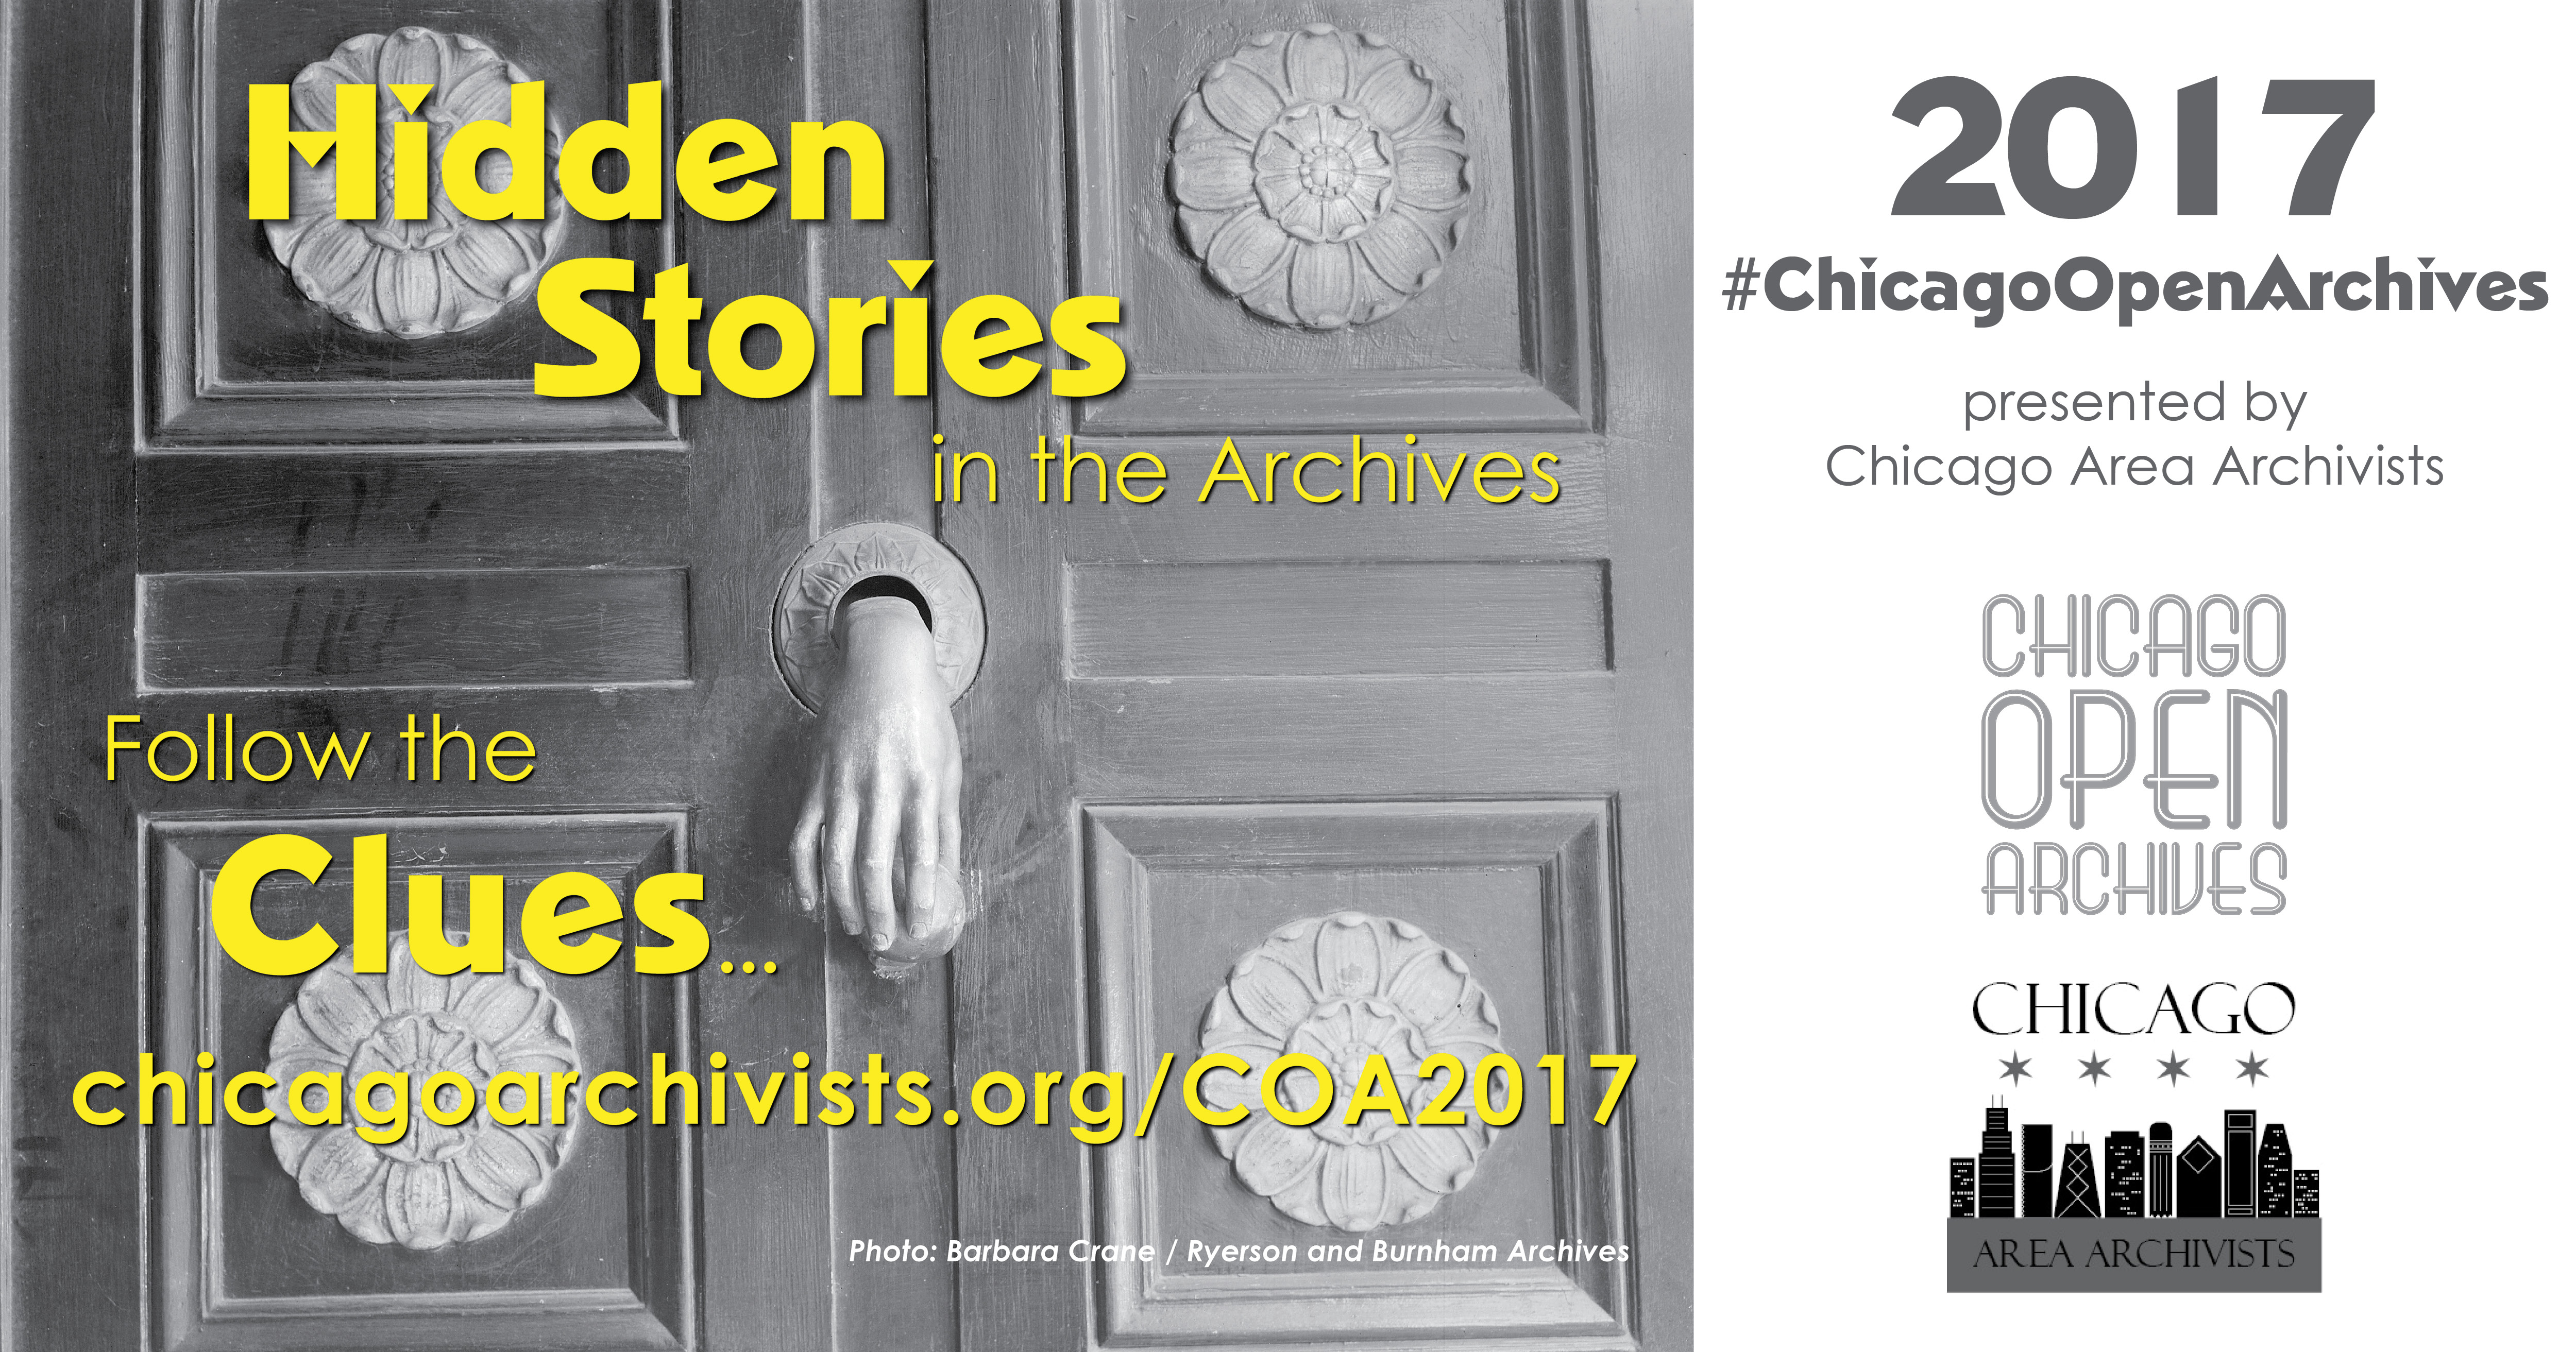 Chicago Open Archives 2017: Hidden Stories 